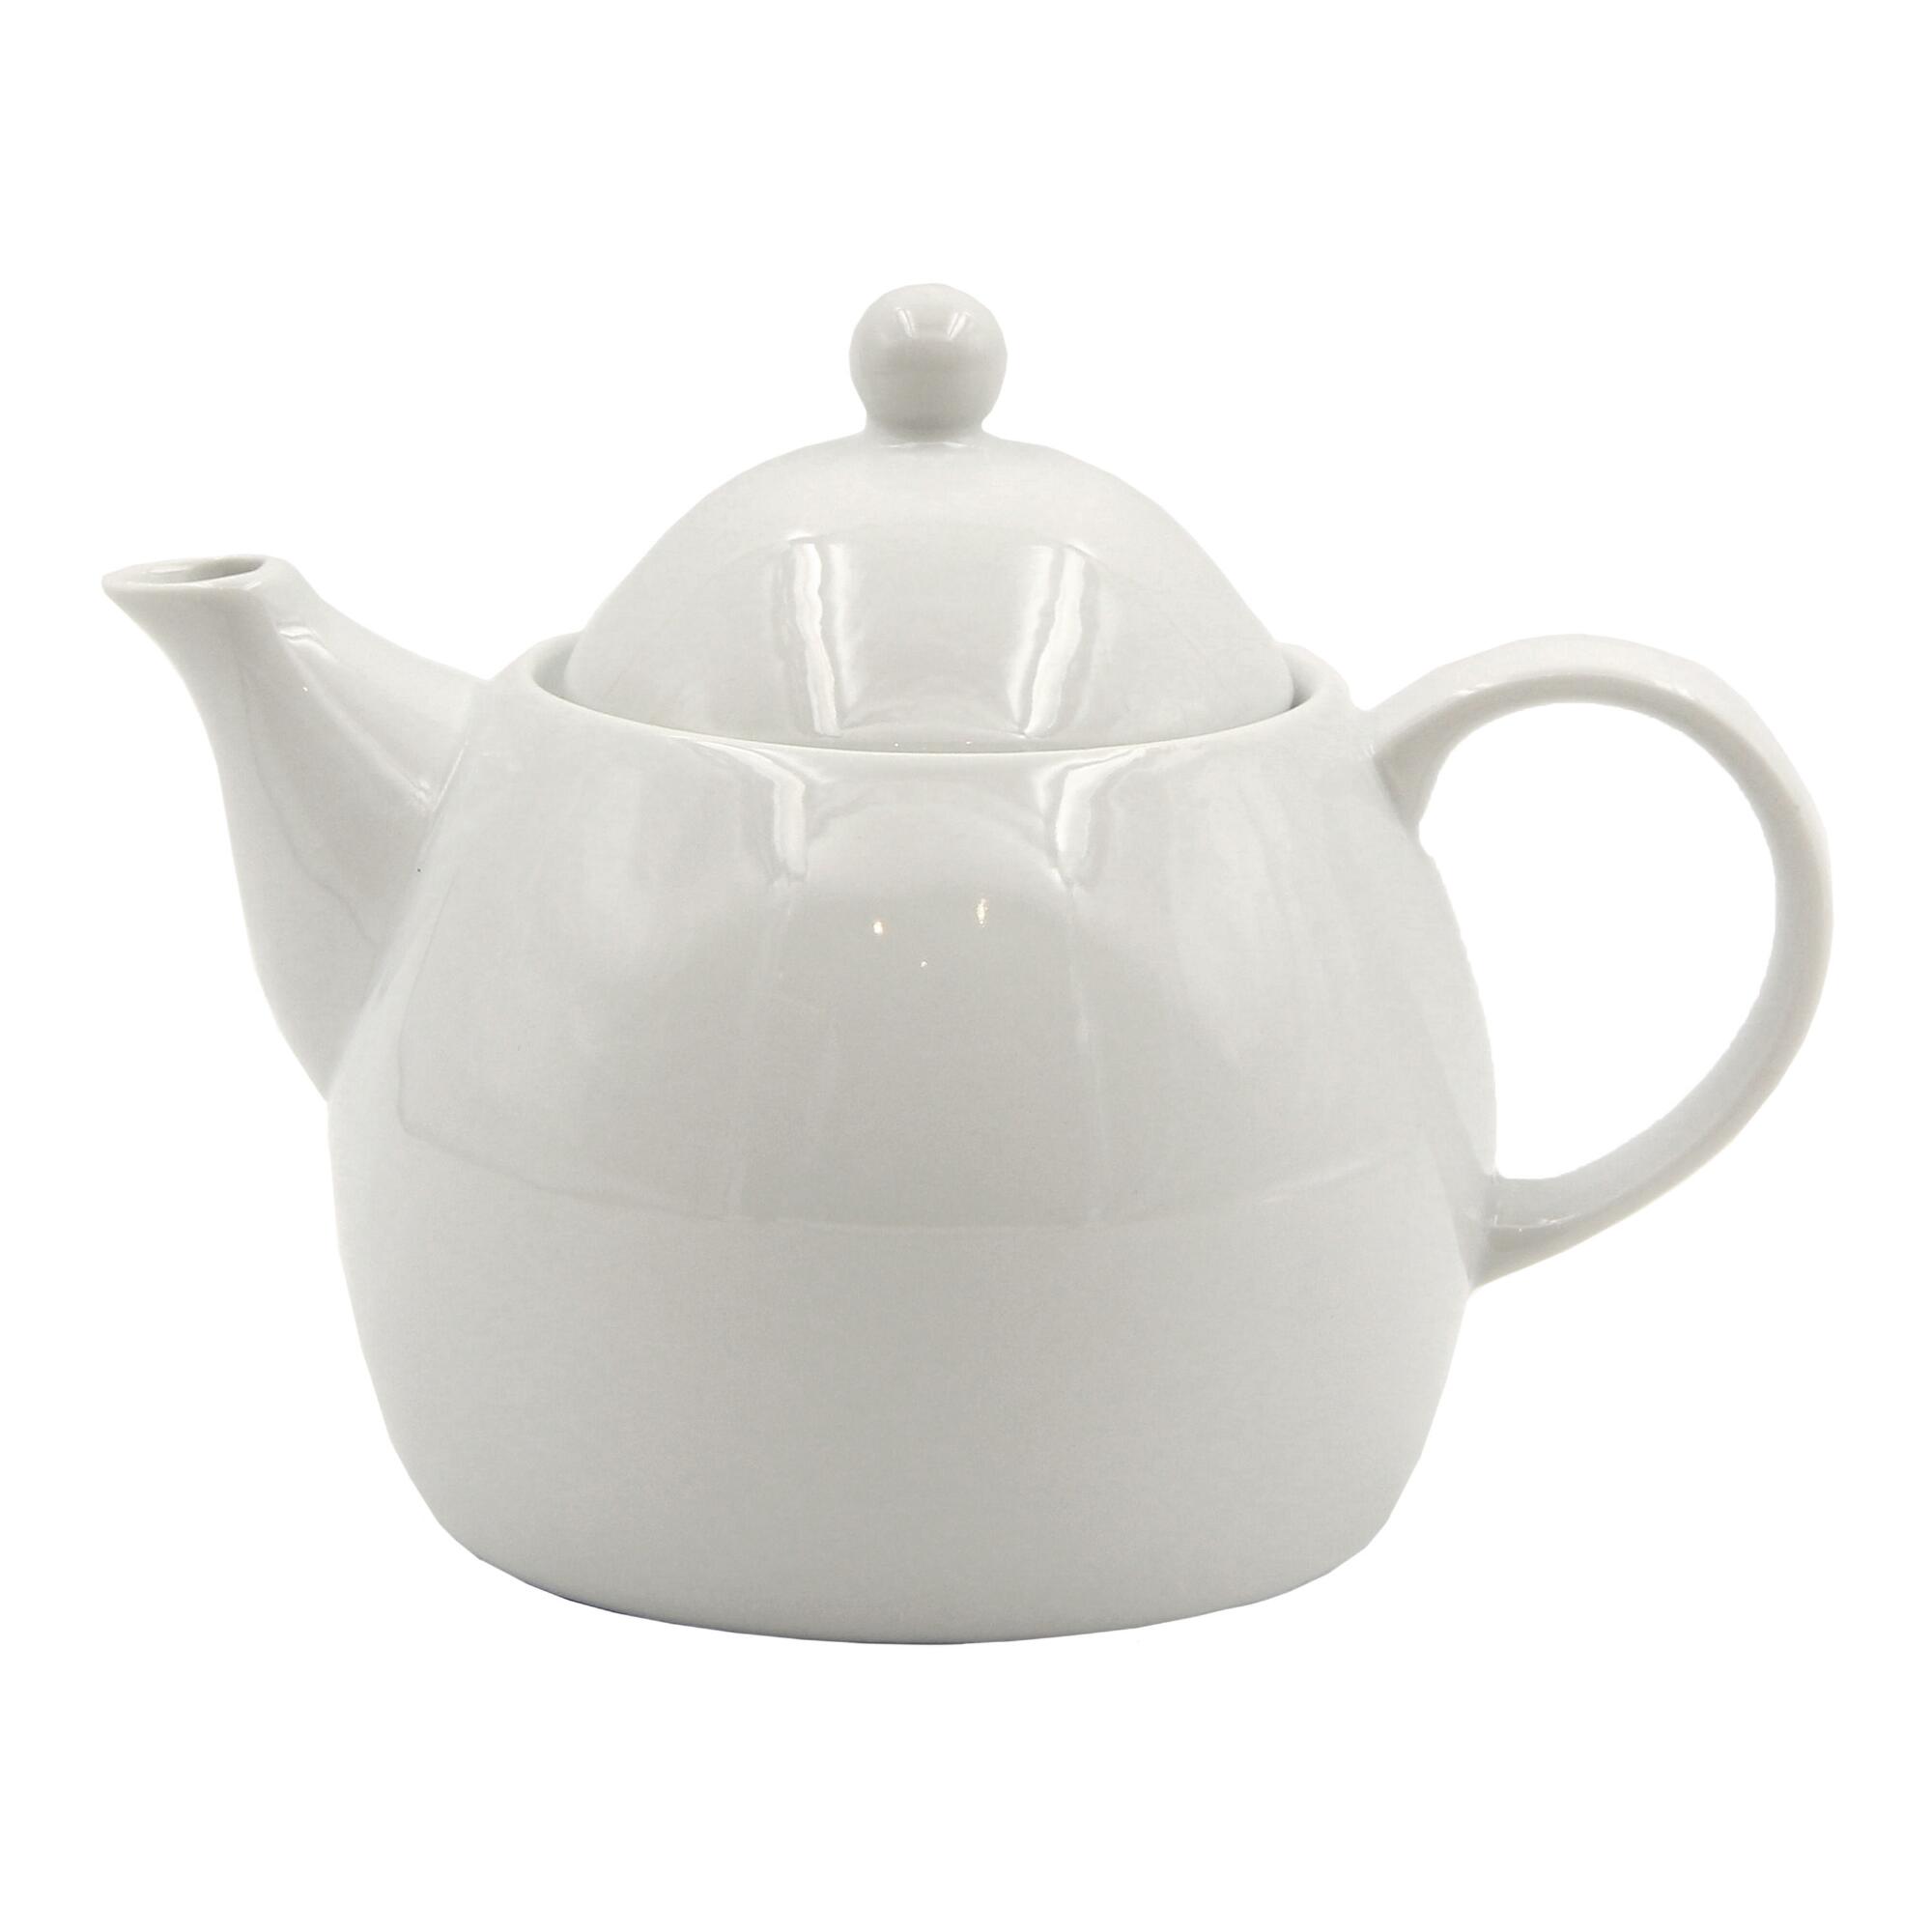 White Porcelain Coupe Teapot by World Market